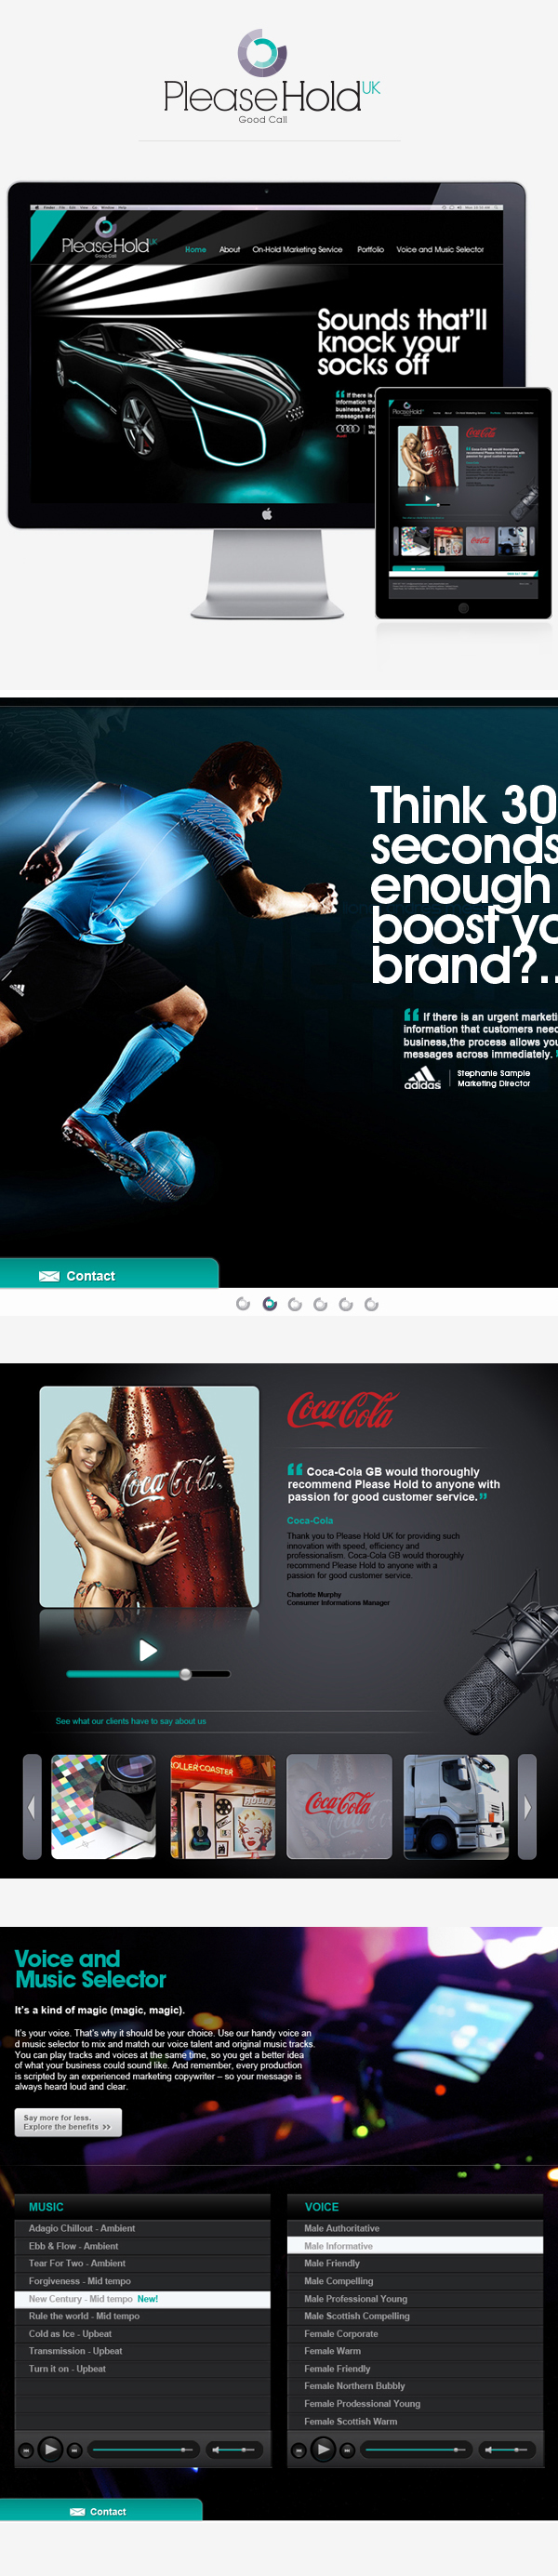 cool web design sophisticated web design quircky web design big brands web luxurious web on-hold marketing